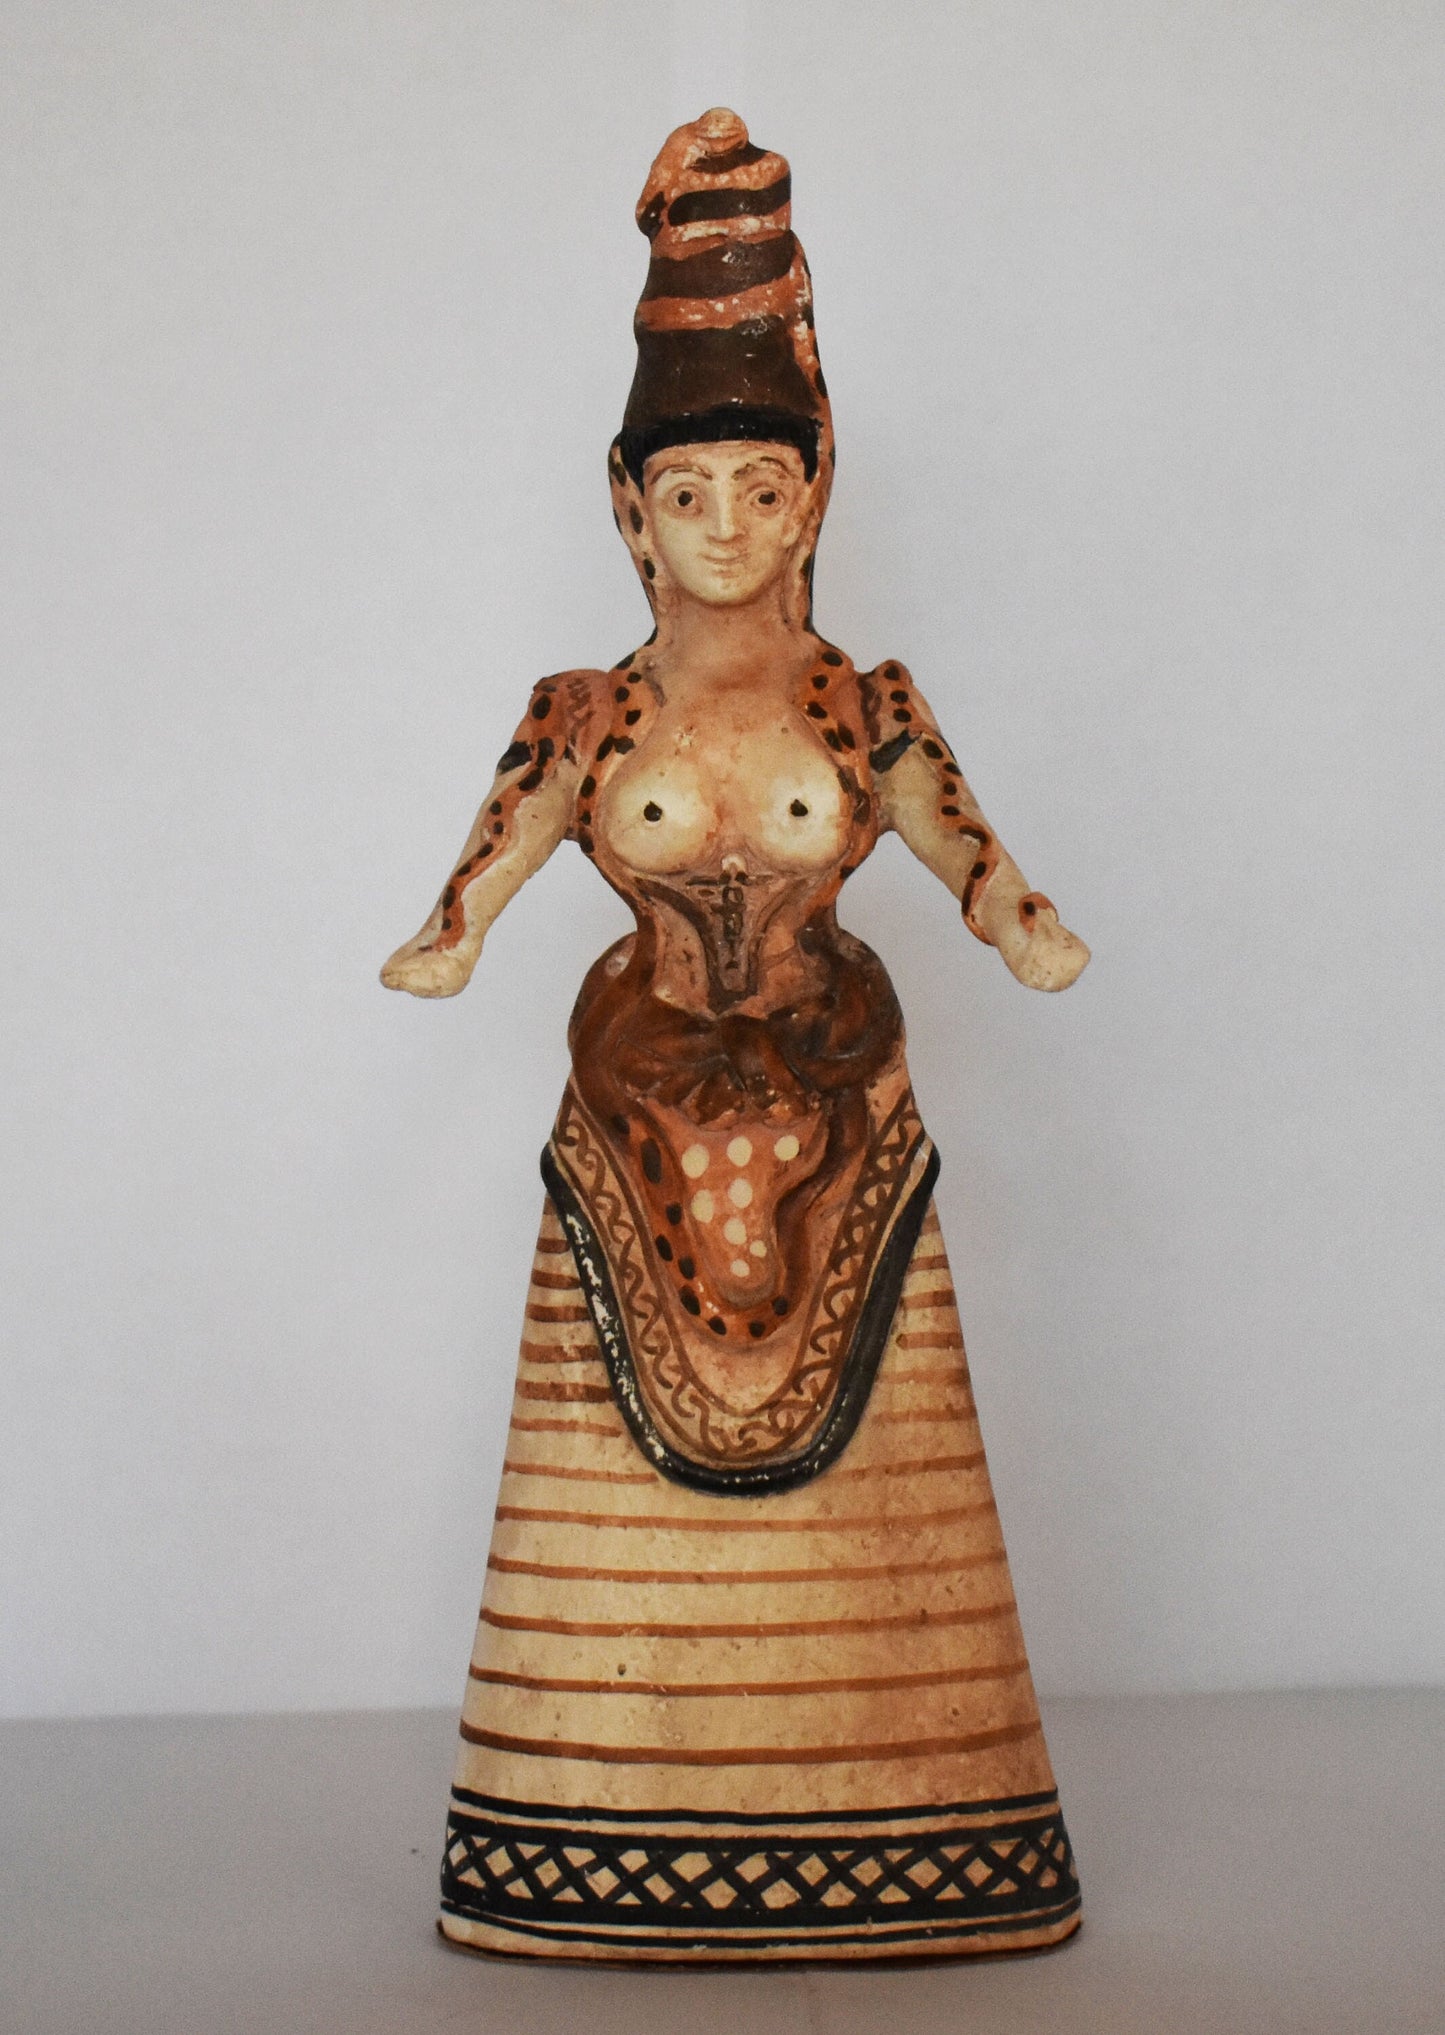 Snake Goddess - Chtonic Aspects - Symbol of the Underworld, Fertility and Sexuality - Bronze Age - Minoan Civilization - Ceramic Artifact